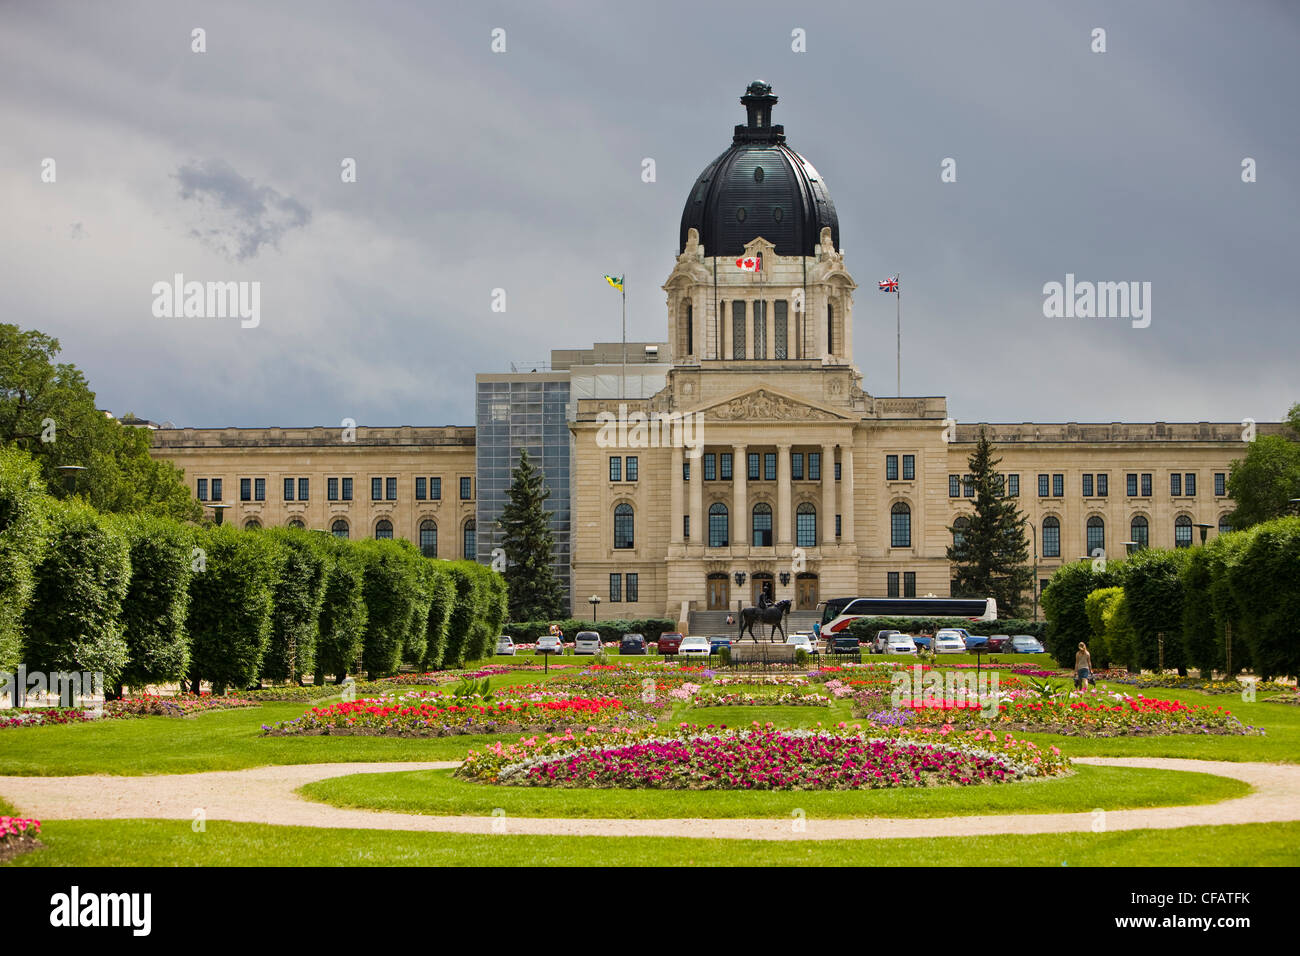 Les Jardins de la reine Elizabeth II et l'Édifice de l'Assemblée législative de Regina, Saskatchewan, Canada Banque D'Images